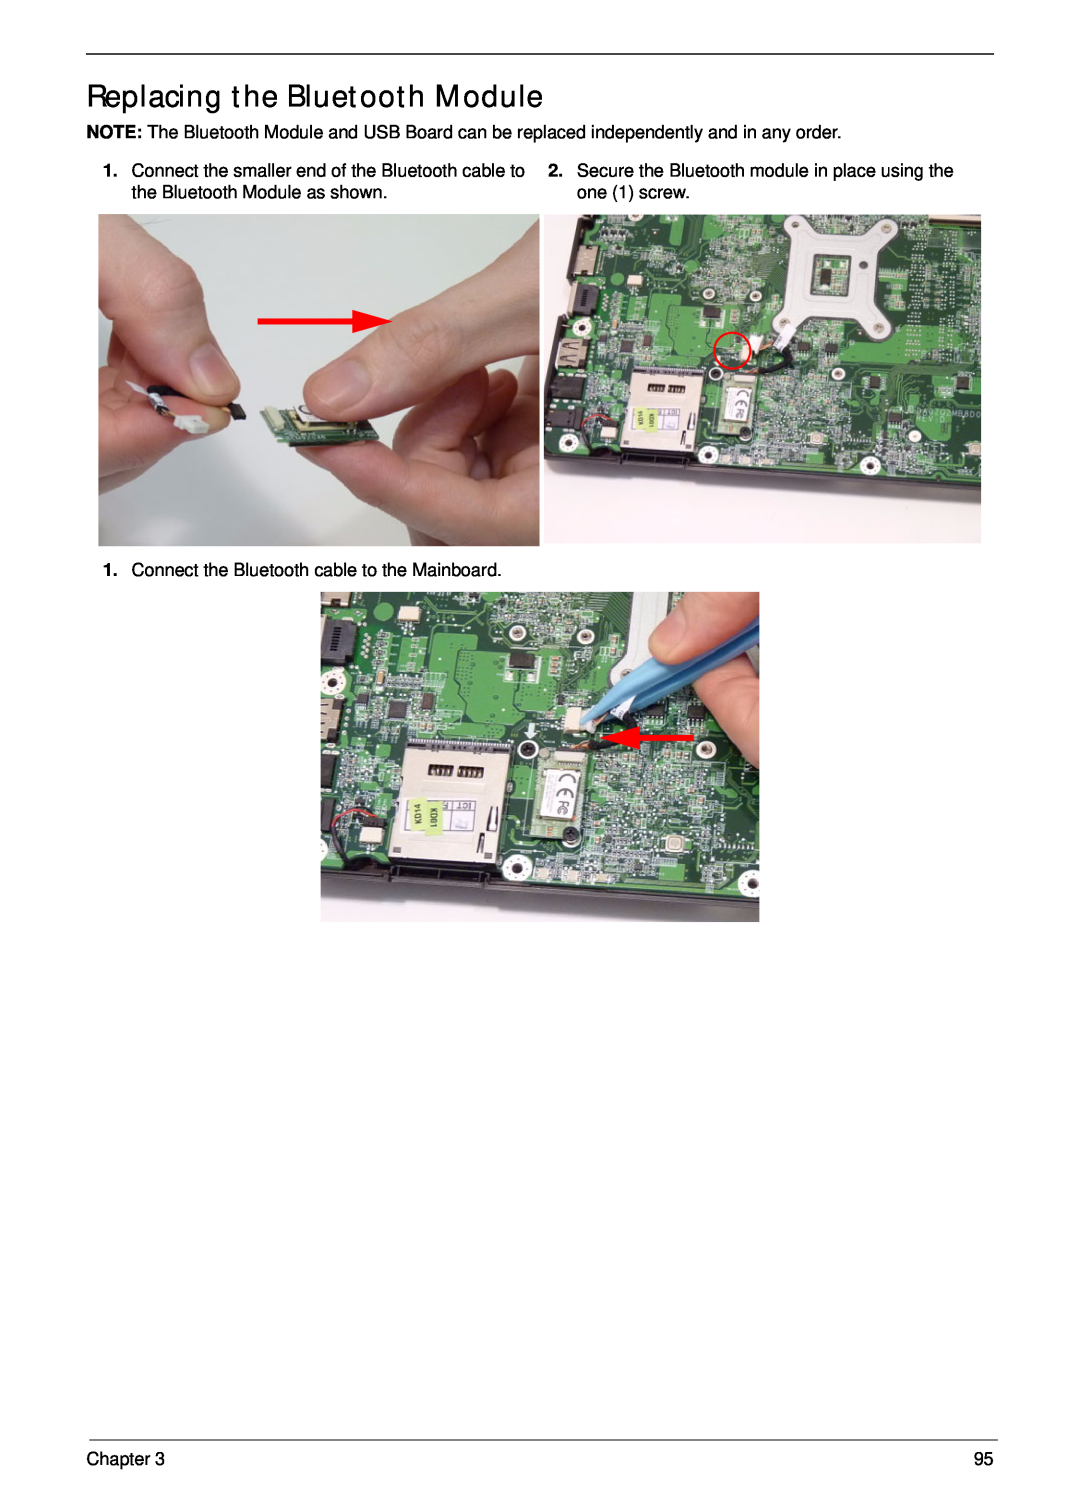 Aspire Digital 4625 Replacing the Bluetooth Module, Secure the Bluetooth module in place using the one 1 screw, Chapter 